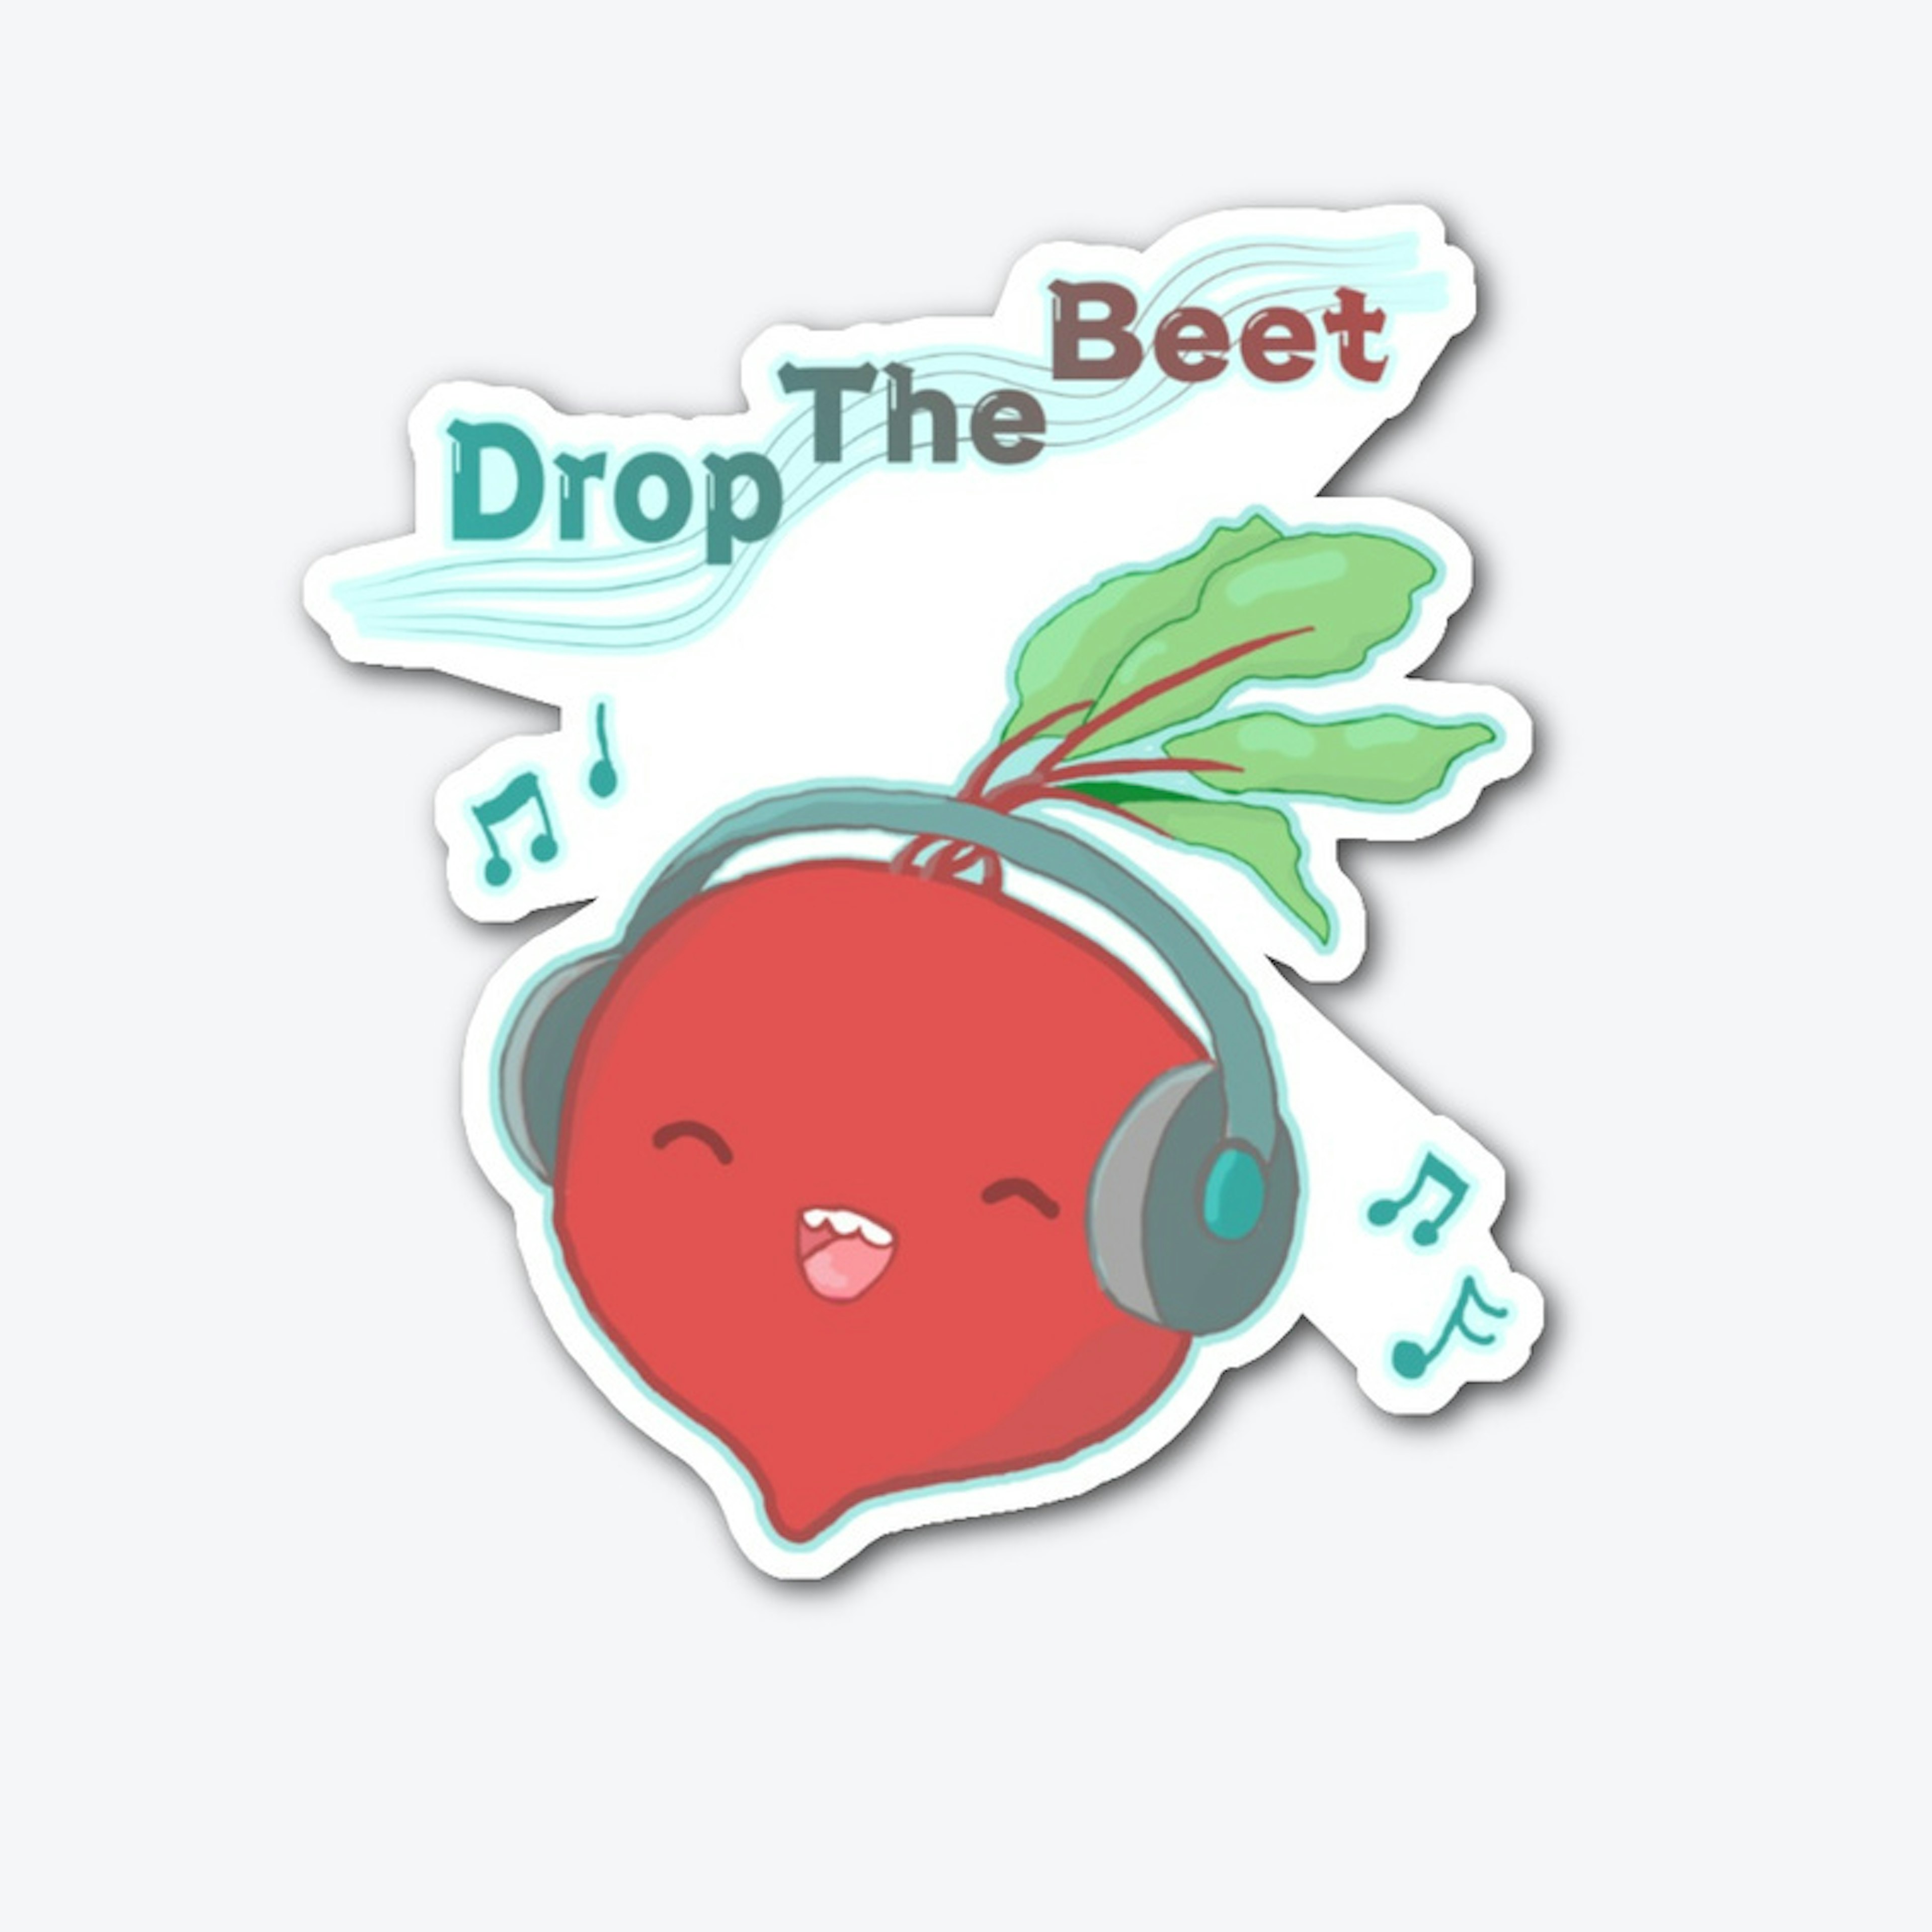 Drop The Beet